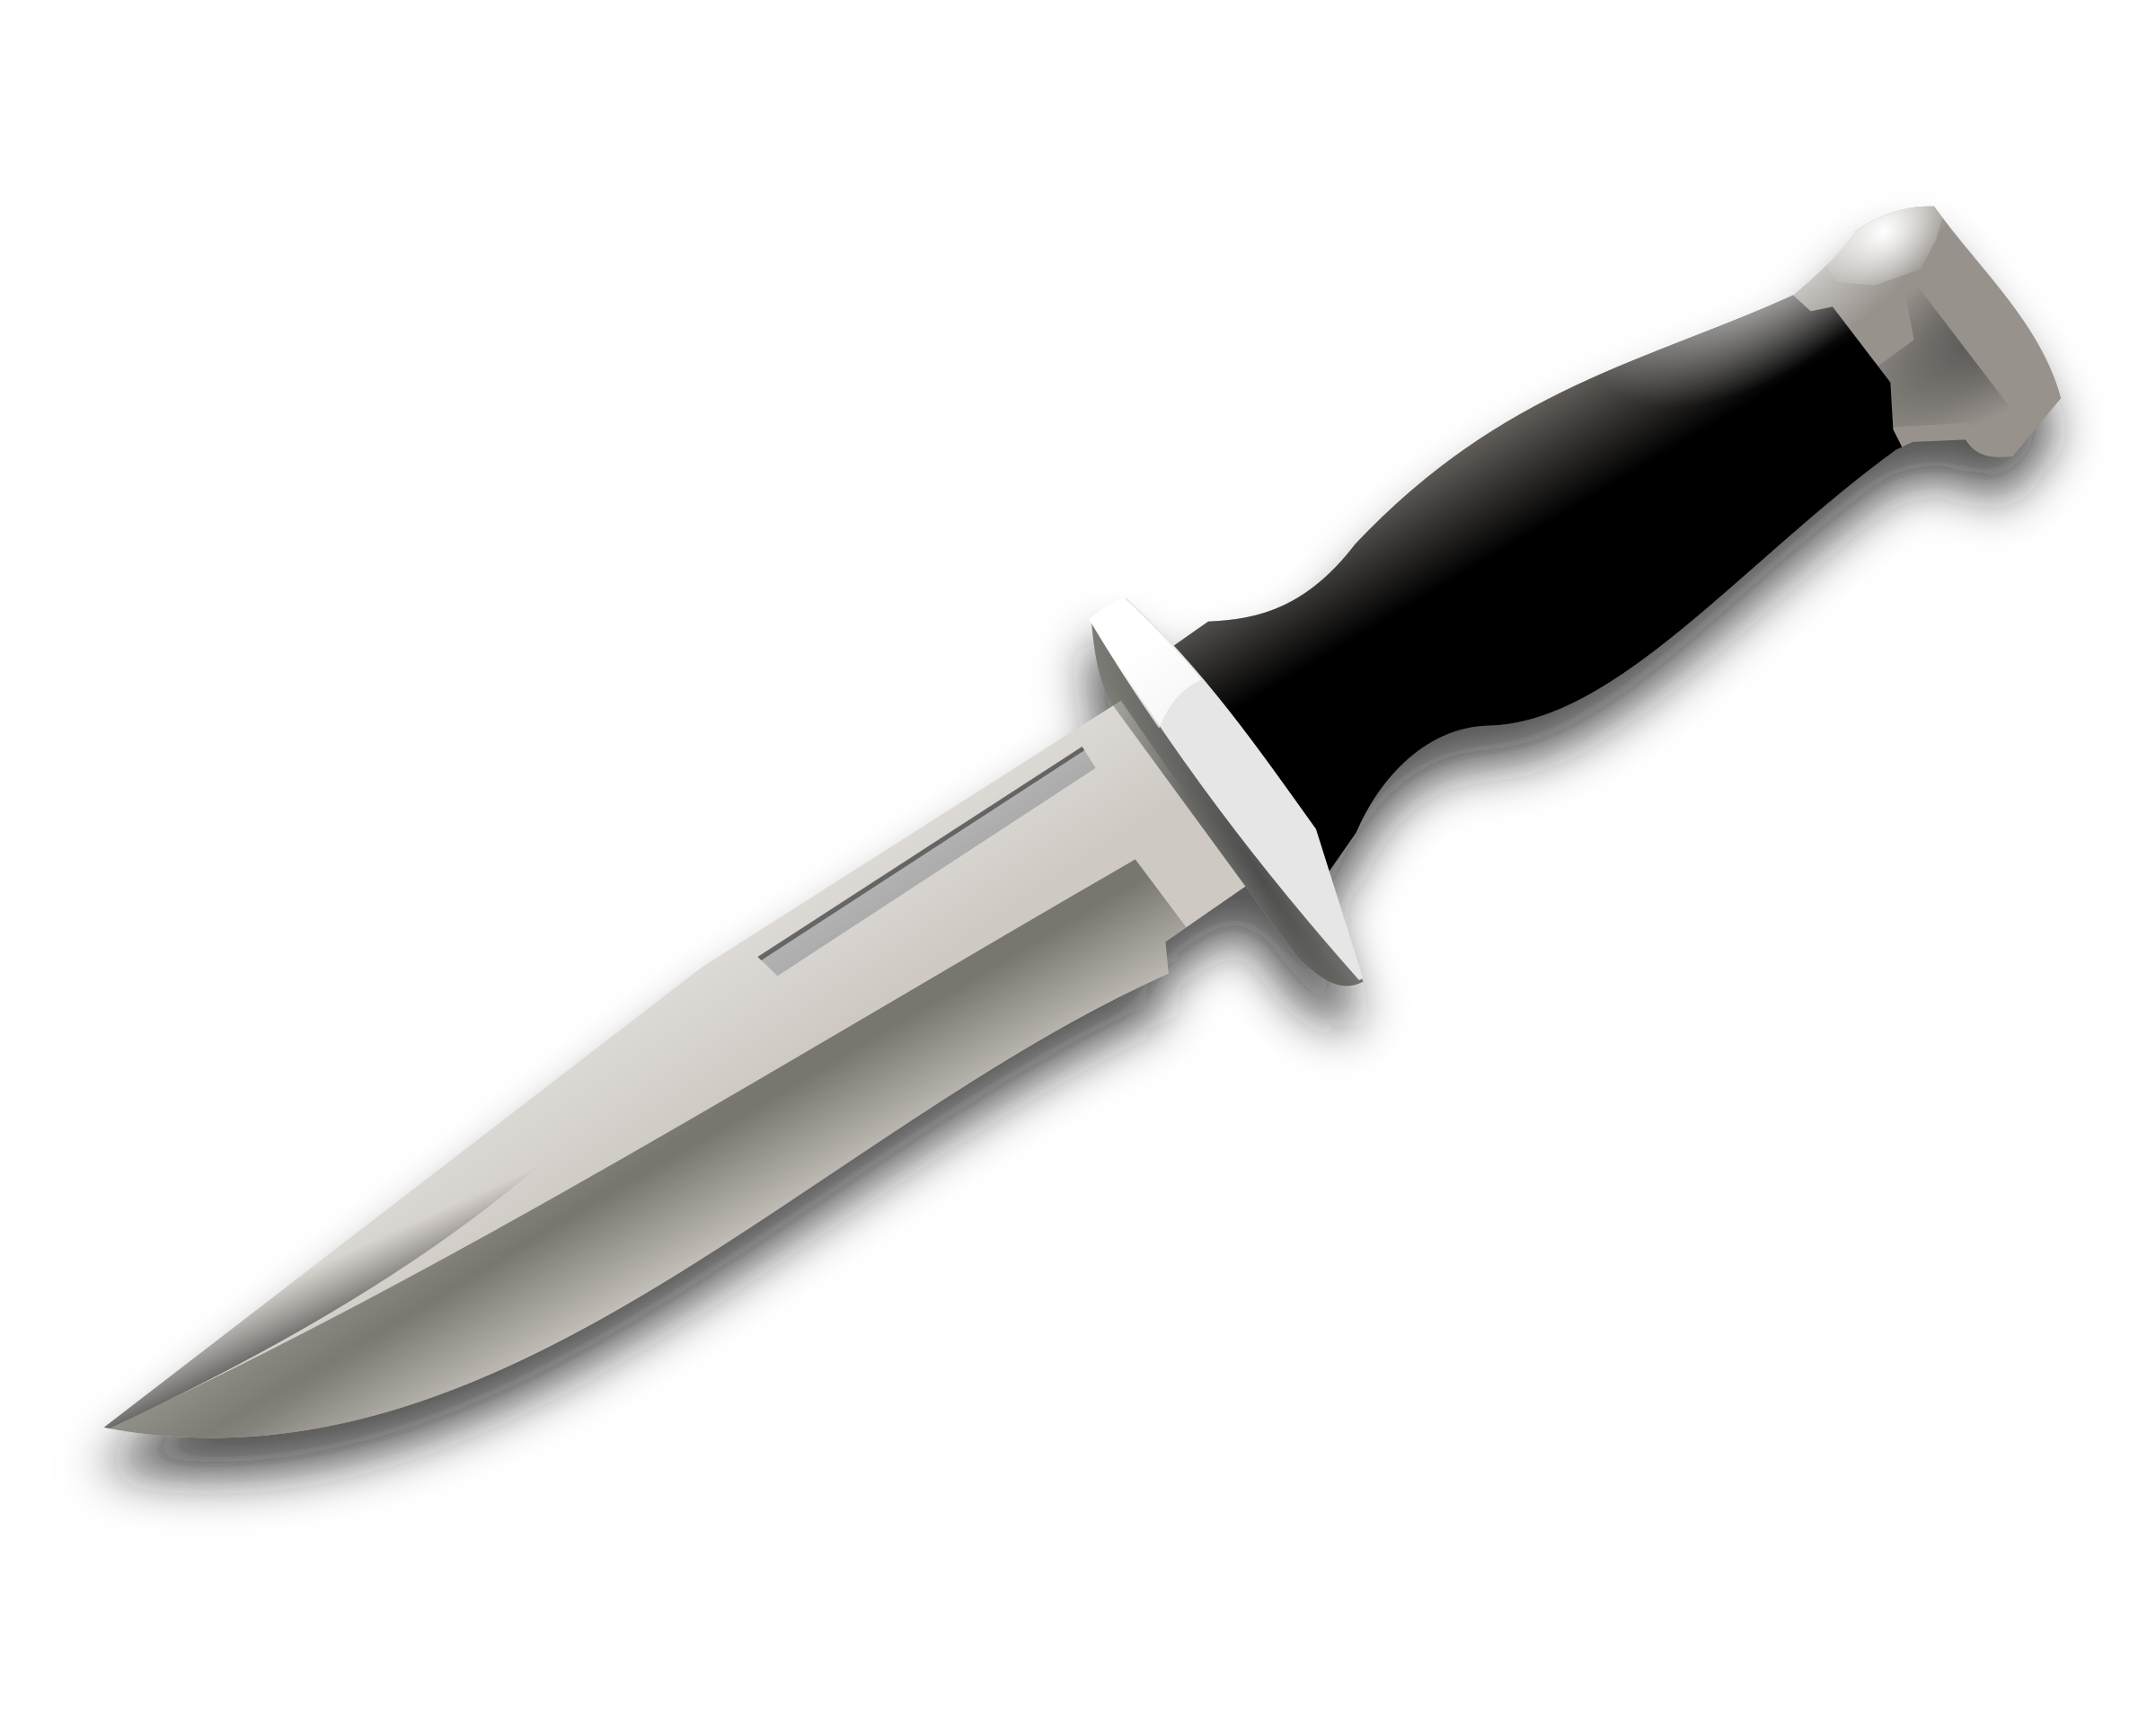 Knife Kitchen Knives Clip art - knives png download - 2400*1920 - Free